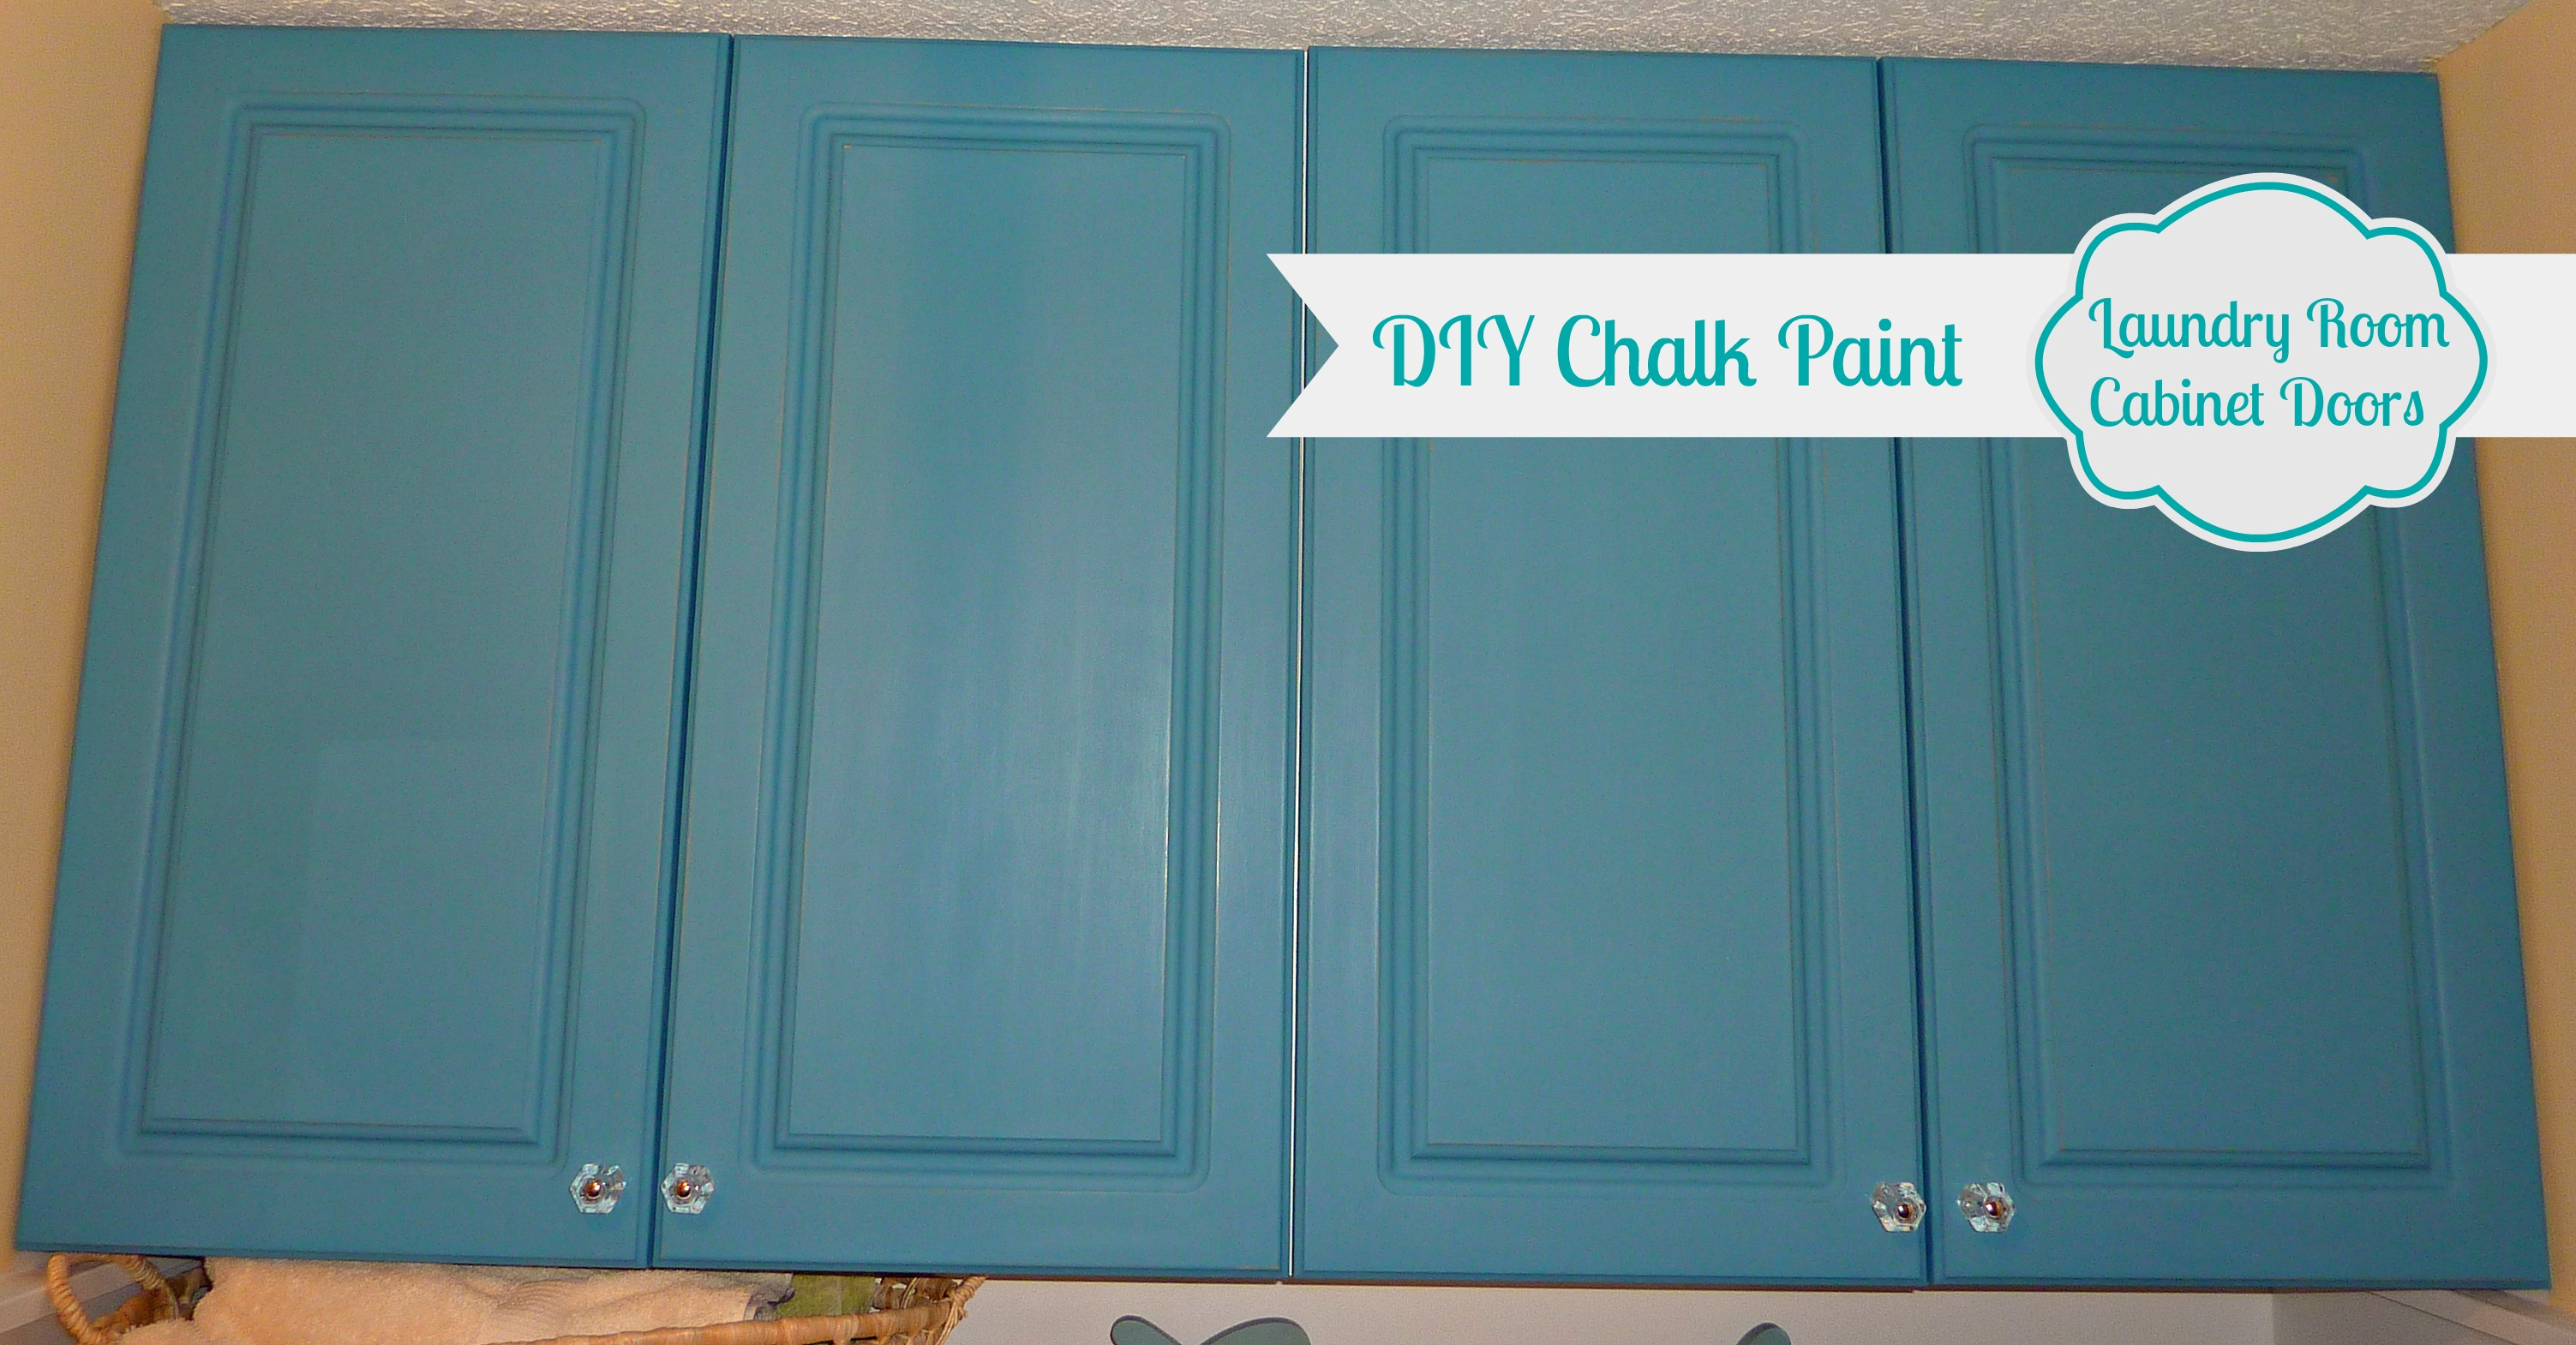 DIY Chalk Paint Laundry Room Cabinet Doors 2